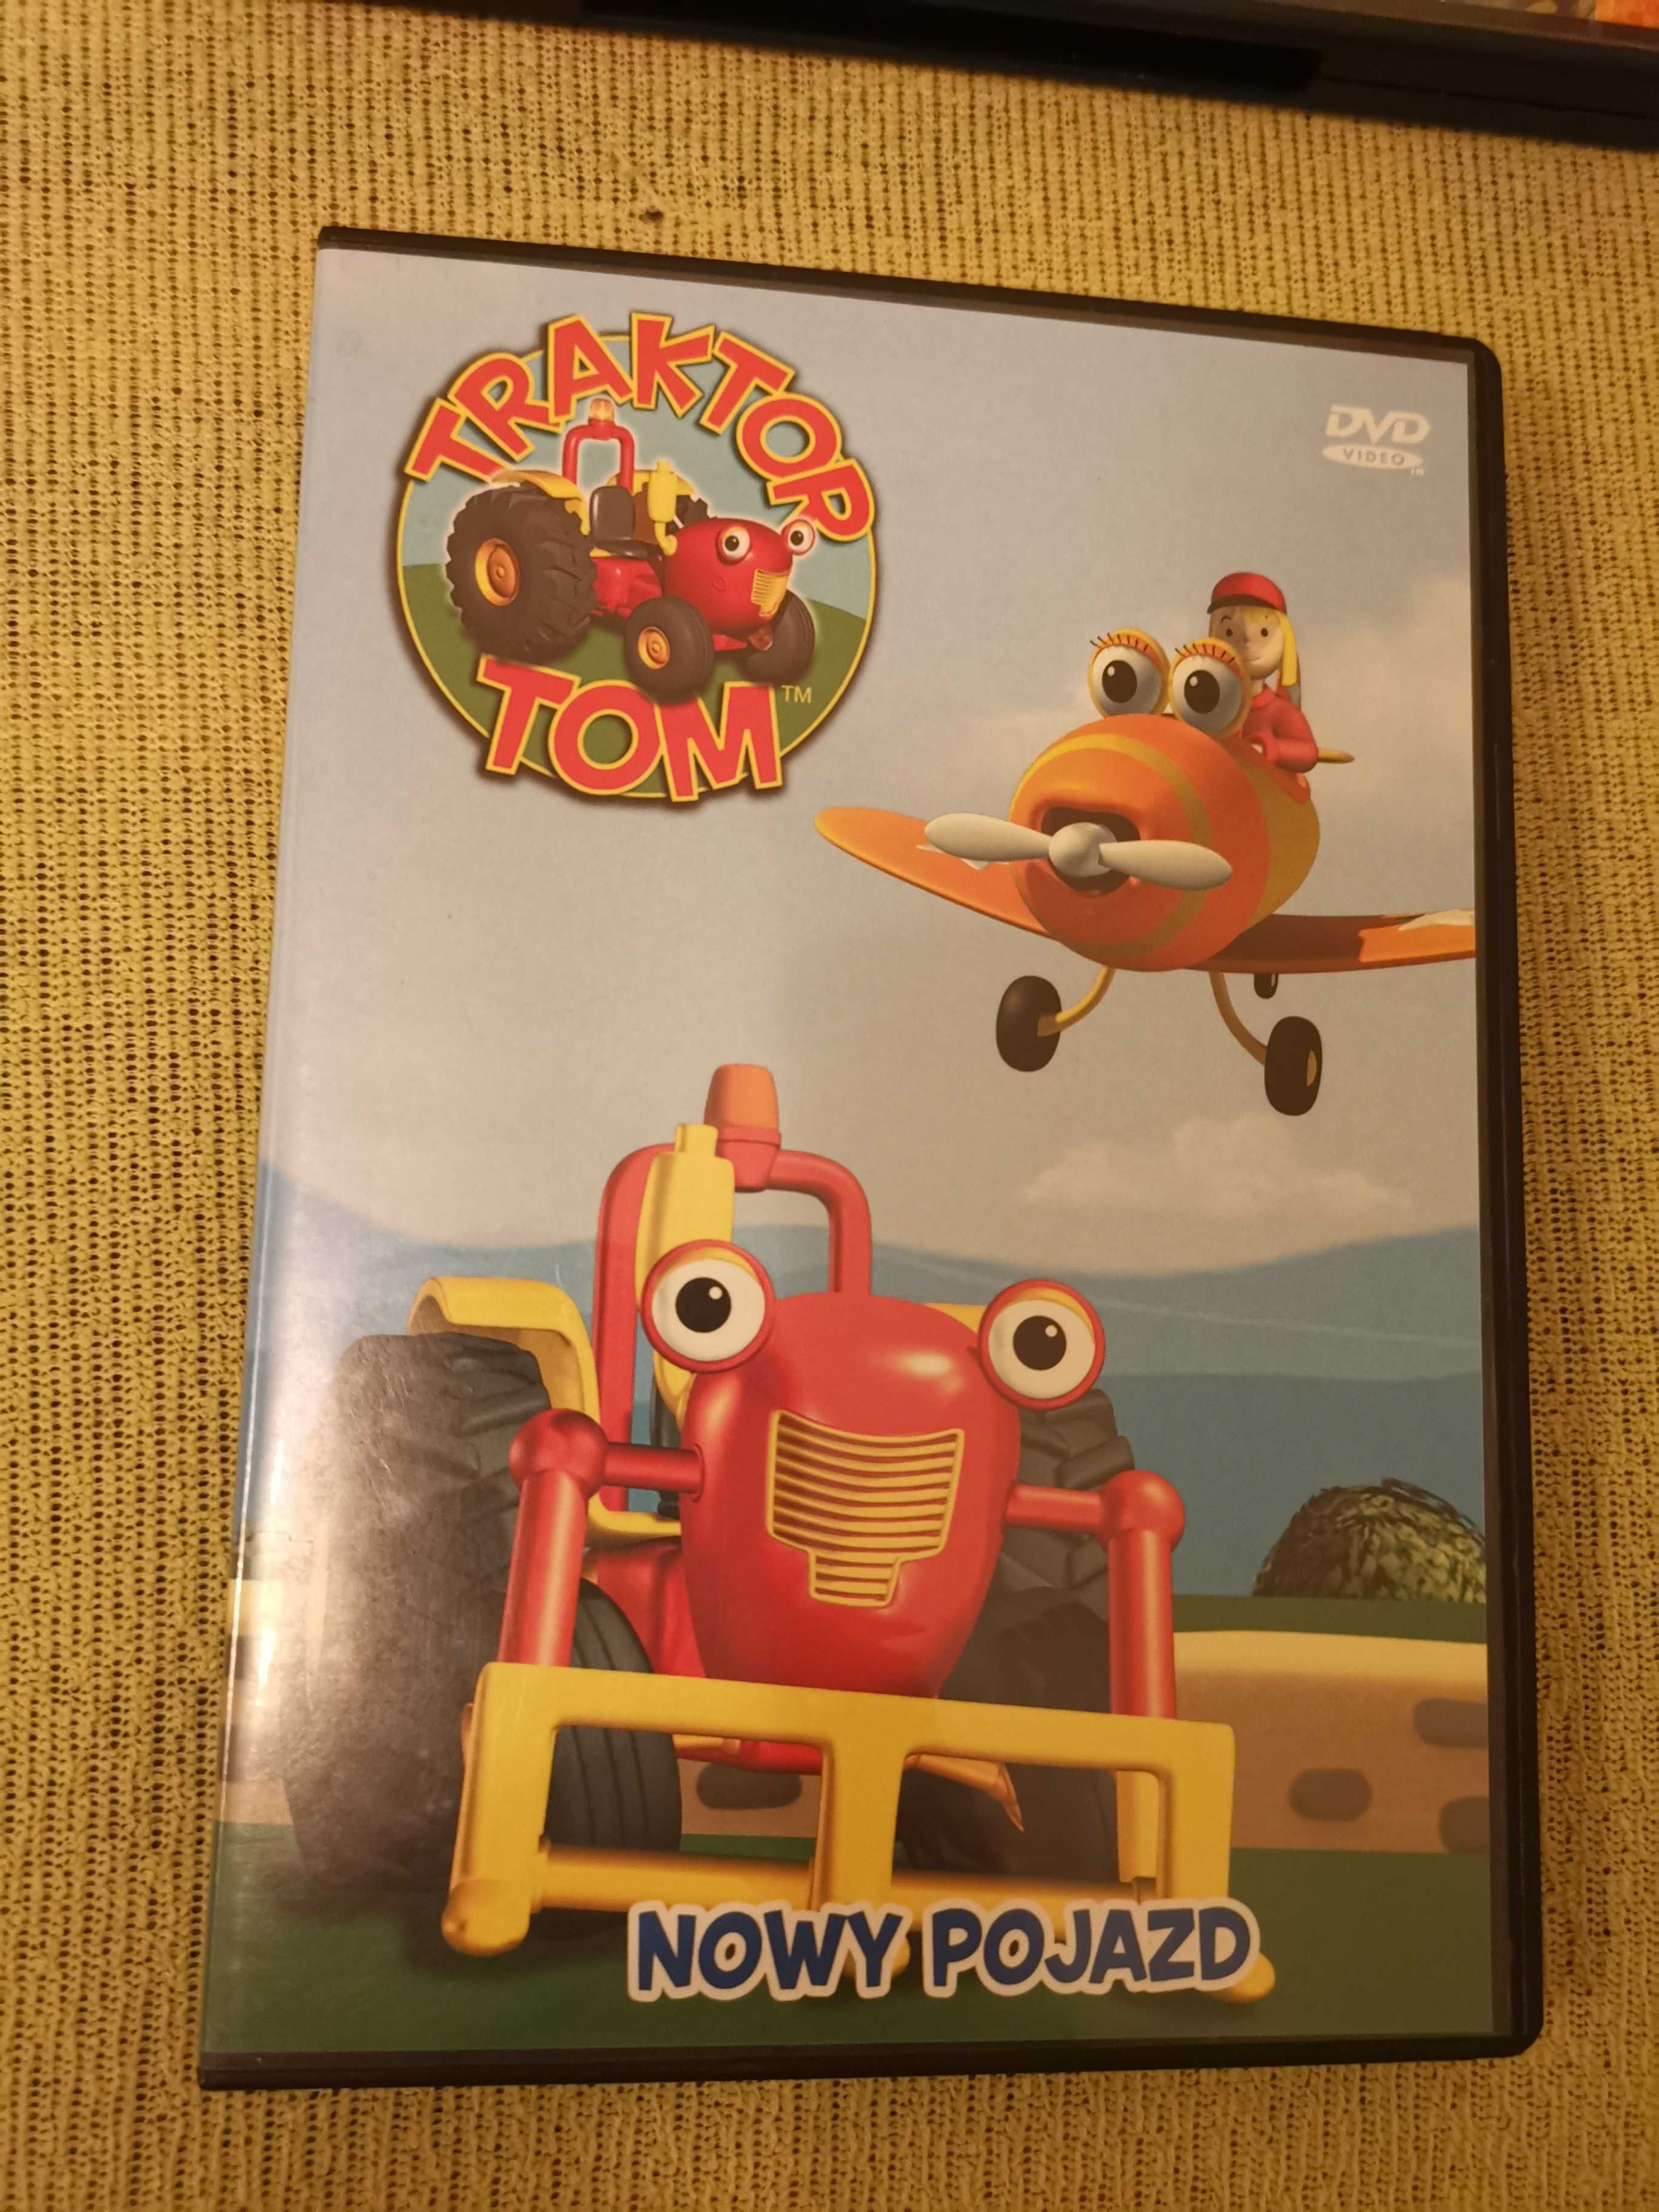 Traktorek Tom, 3-filmy DVD